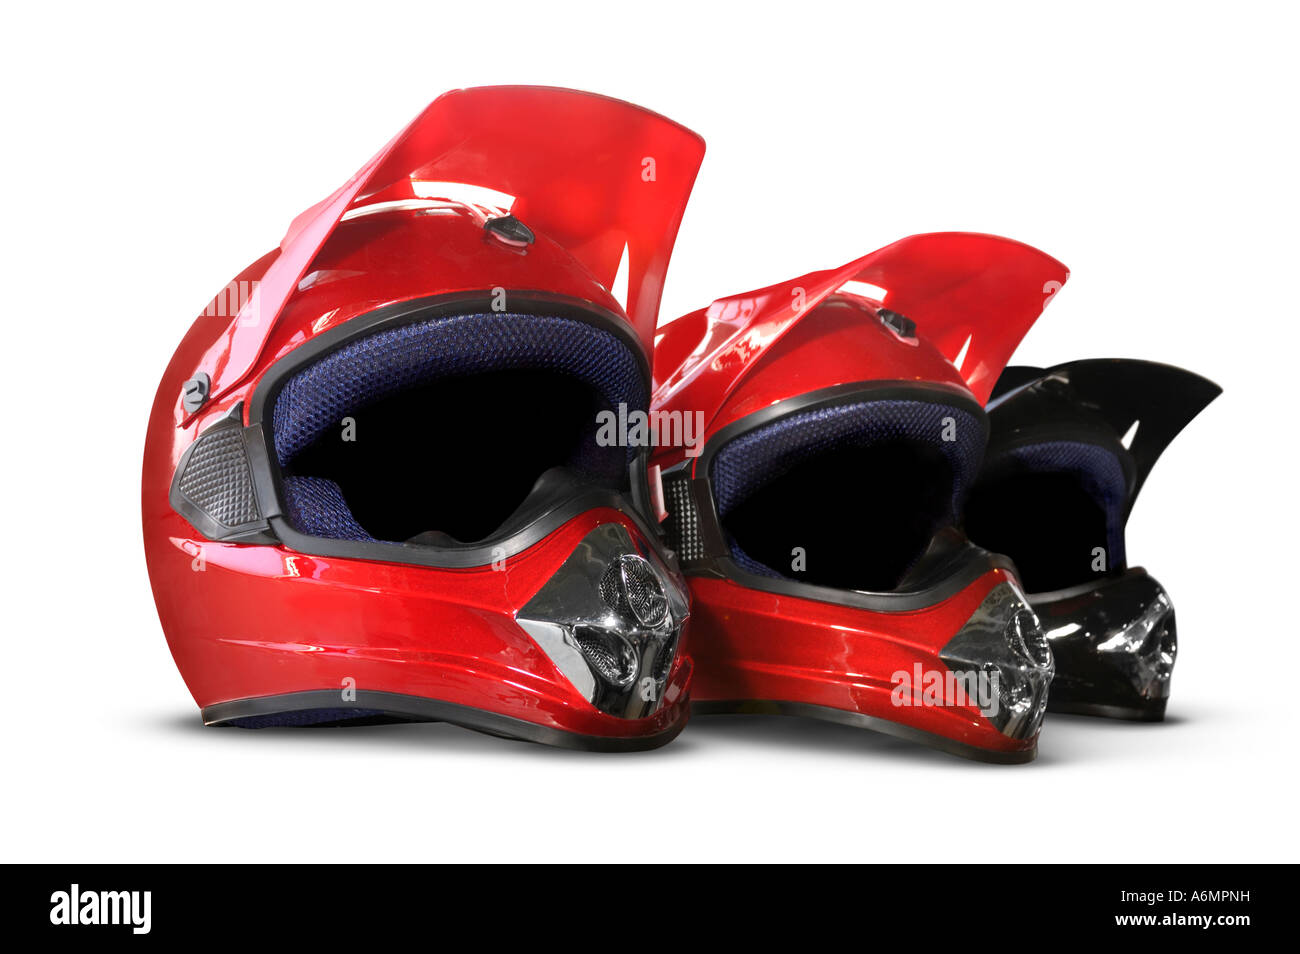 Motorcycle helmets Stock Photo